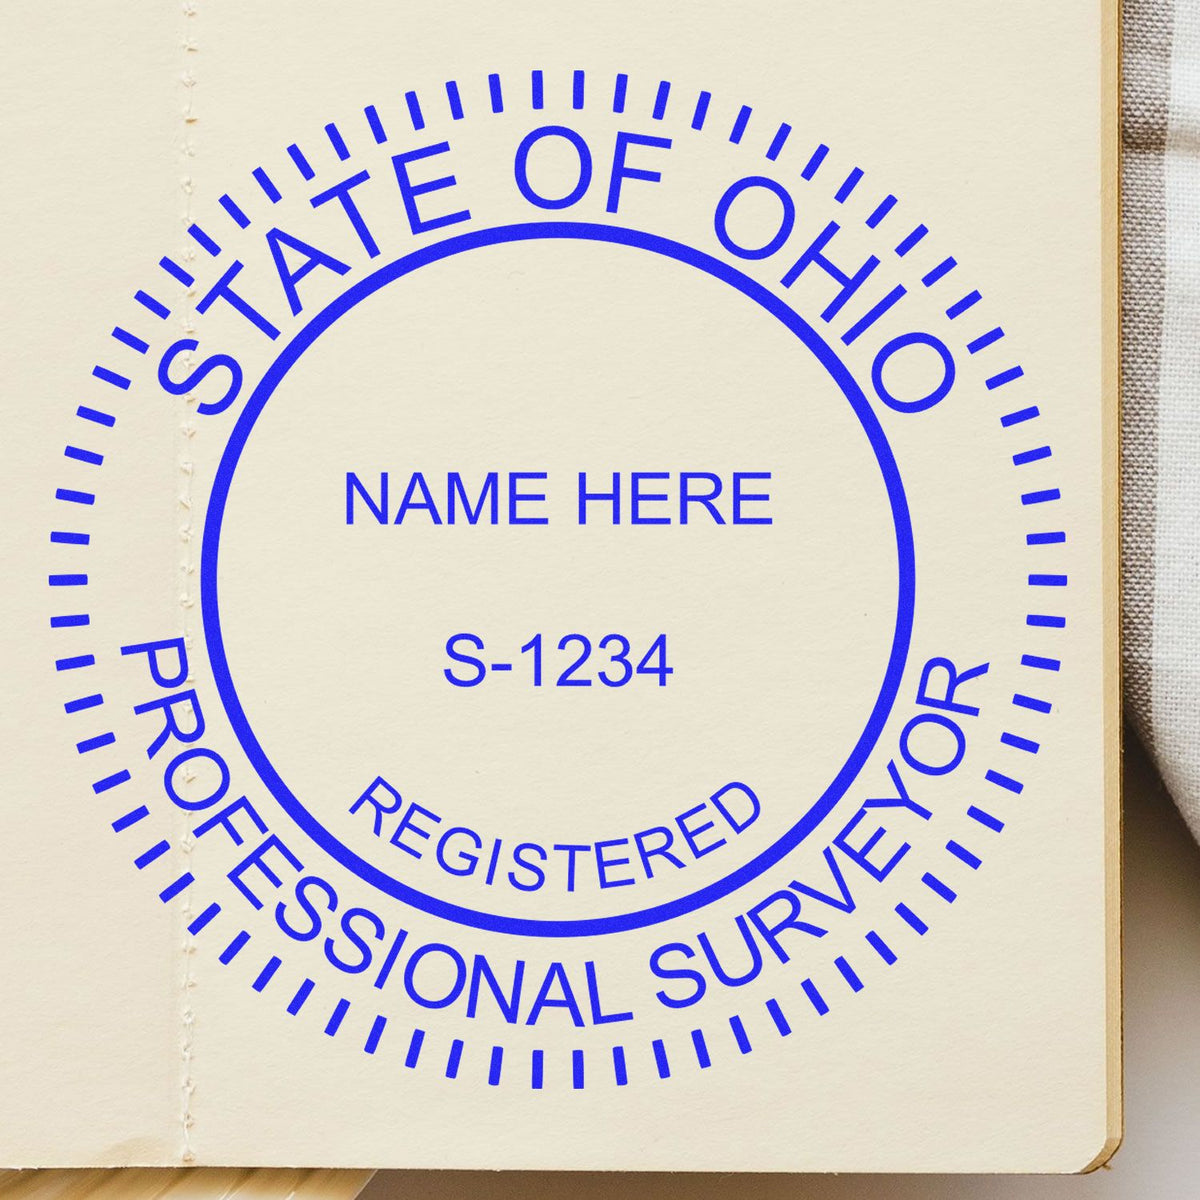 Ohio Land Surveyor Seal Stamp In Use Photo